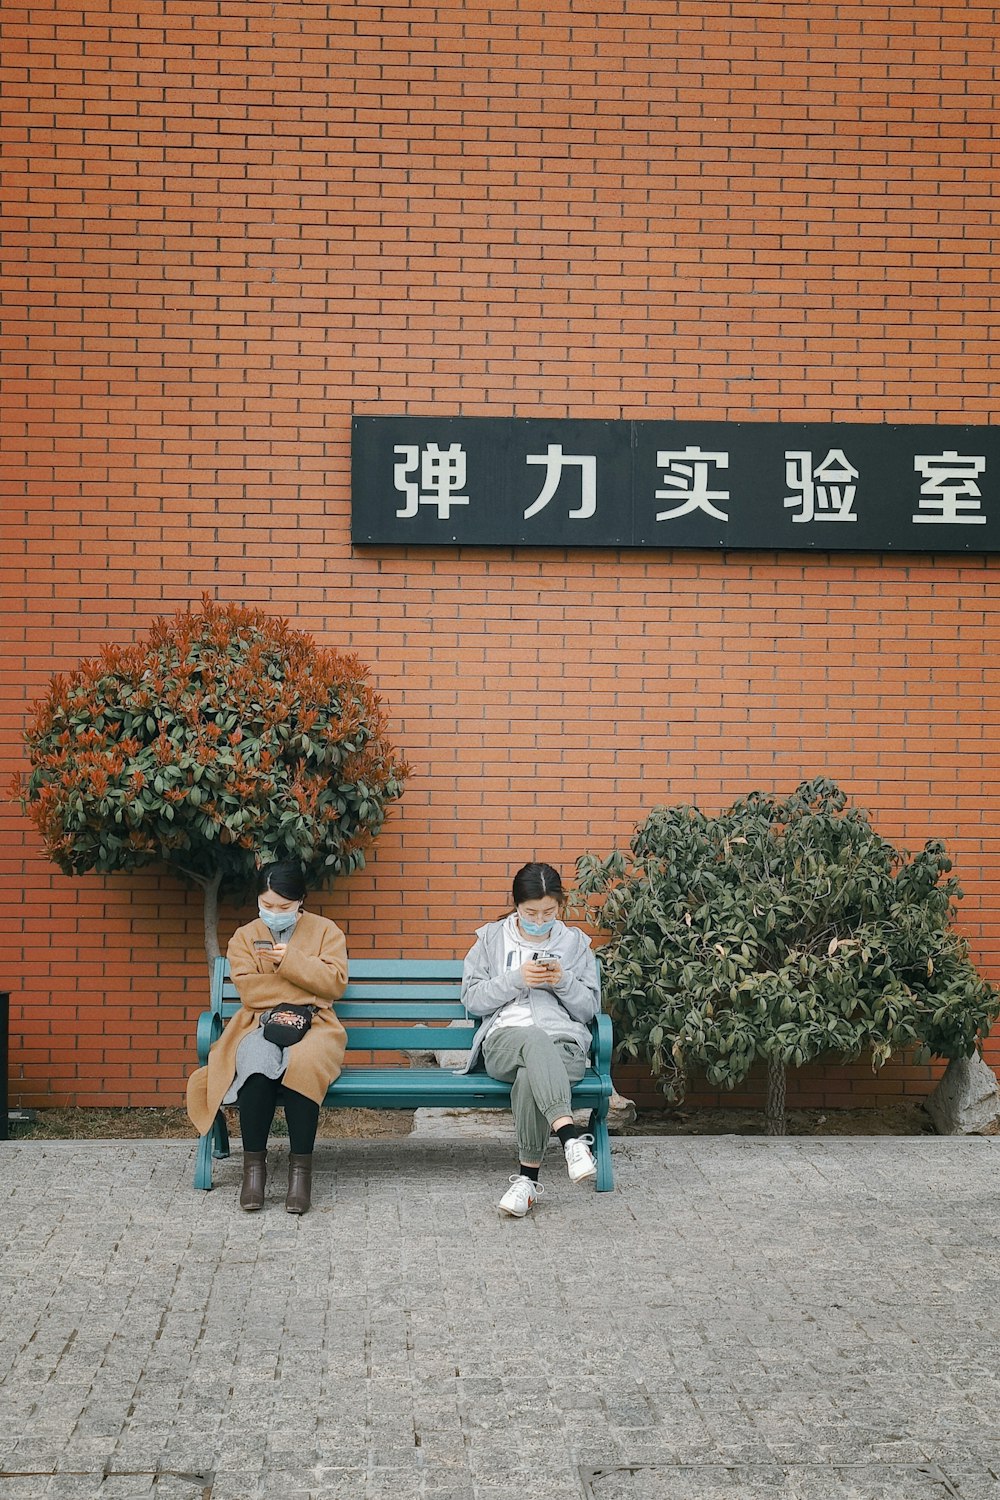 2 men sitting on bench near red brick wall